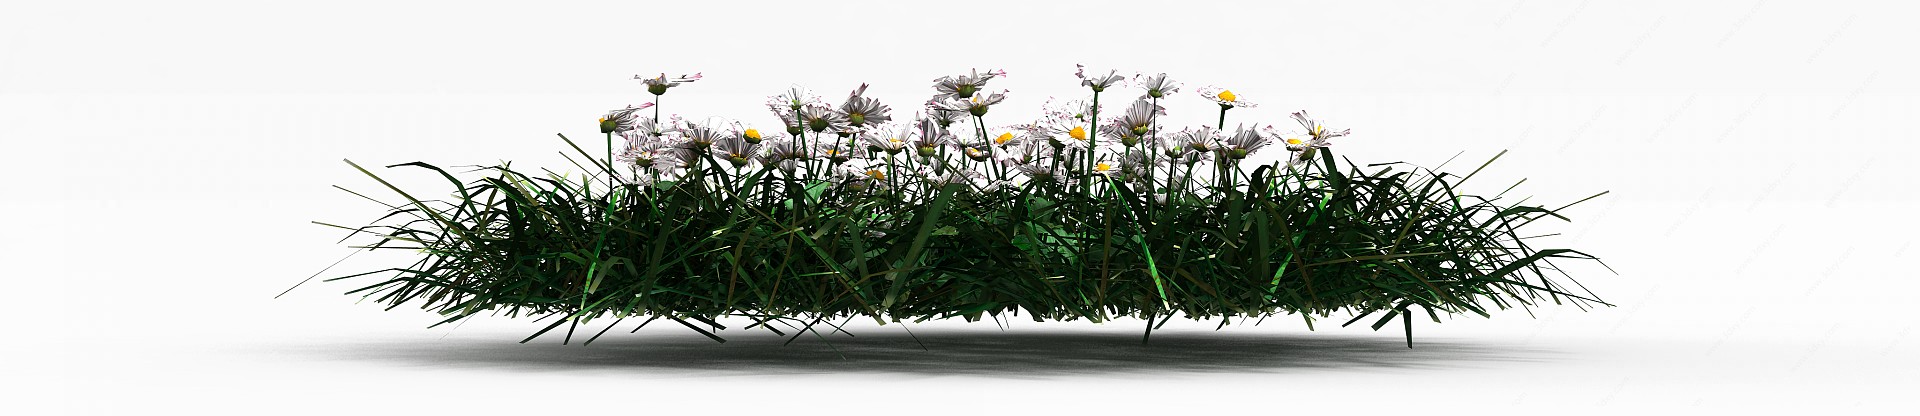 公园花草3D模型